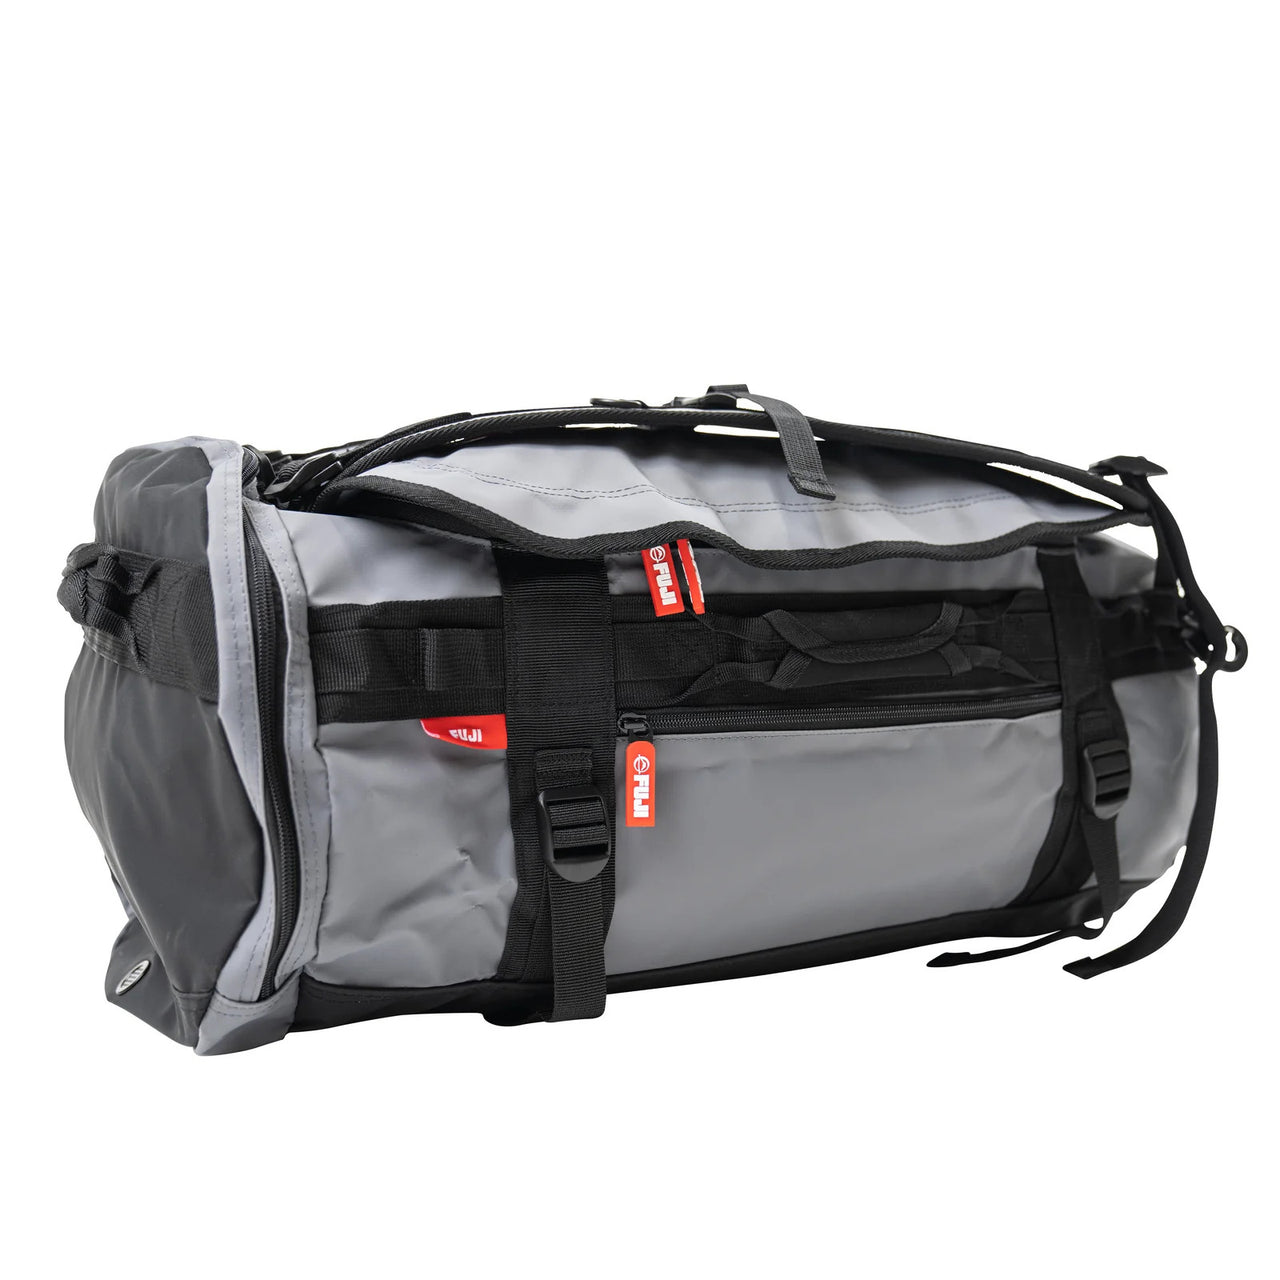 Fuji Comp Convertible Backpack Duffle - Grey/Black